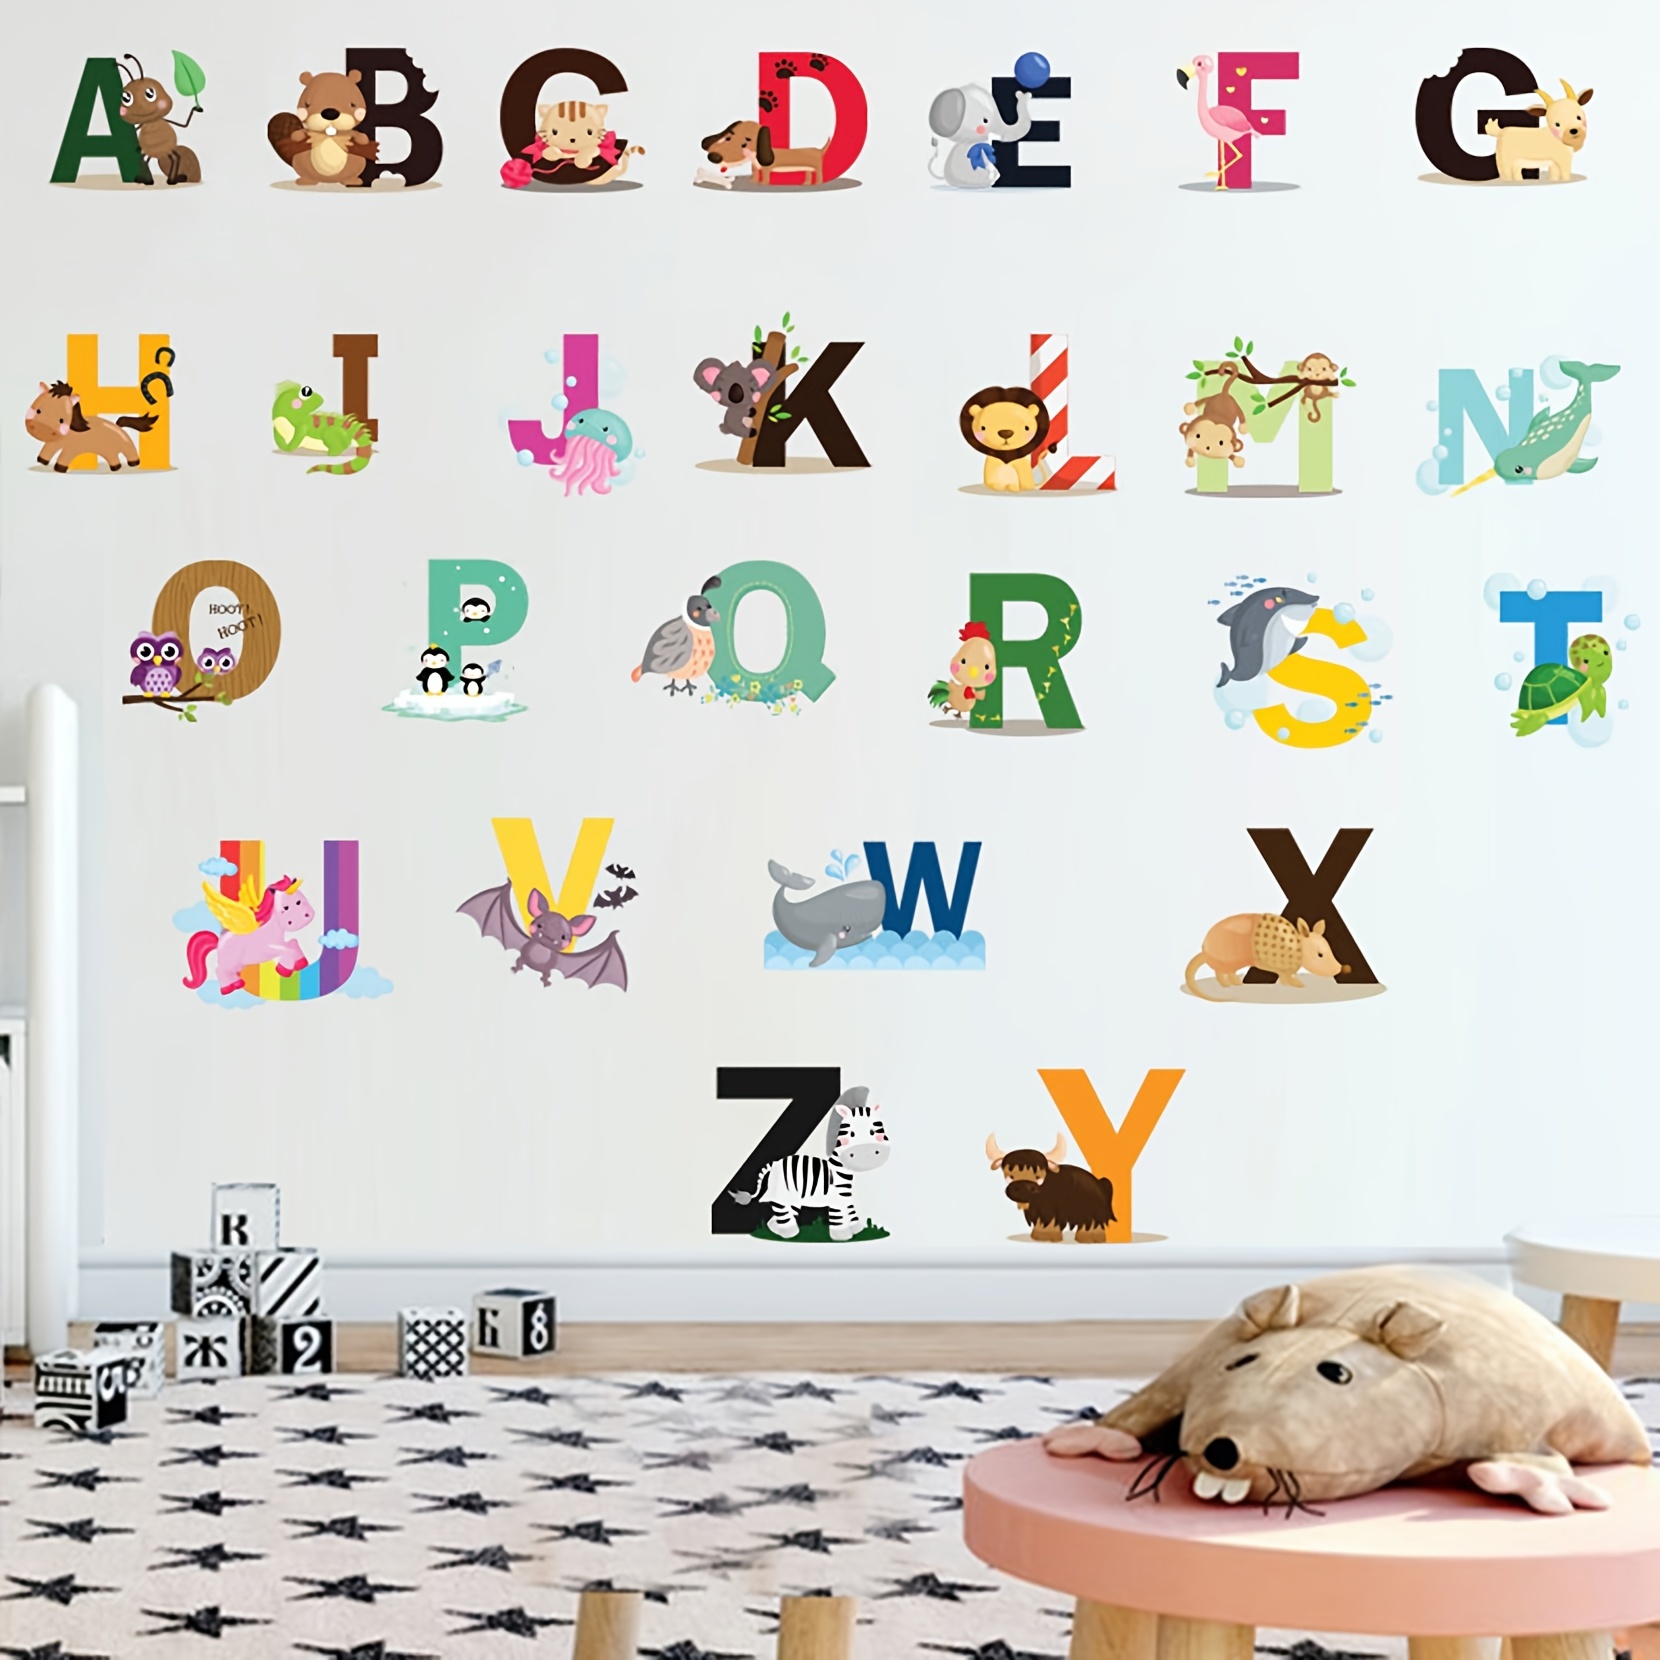 Vinyl Wall Decal ABC Wall Decal Animal Alphabet Decal Nursery Wall